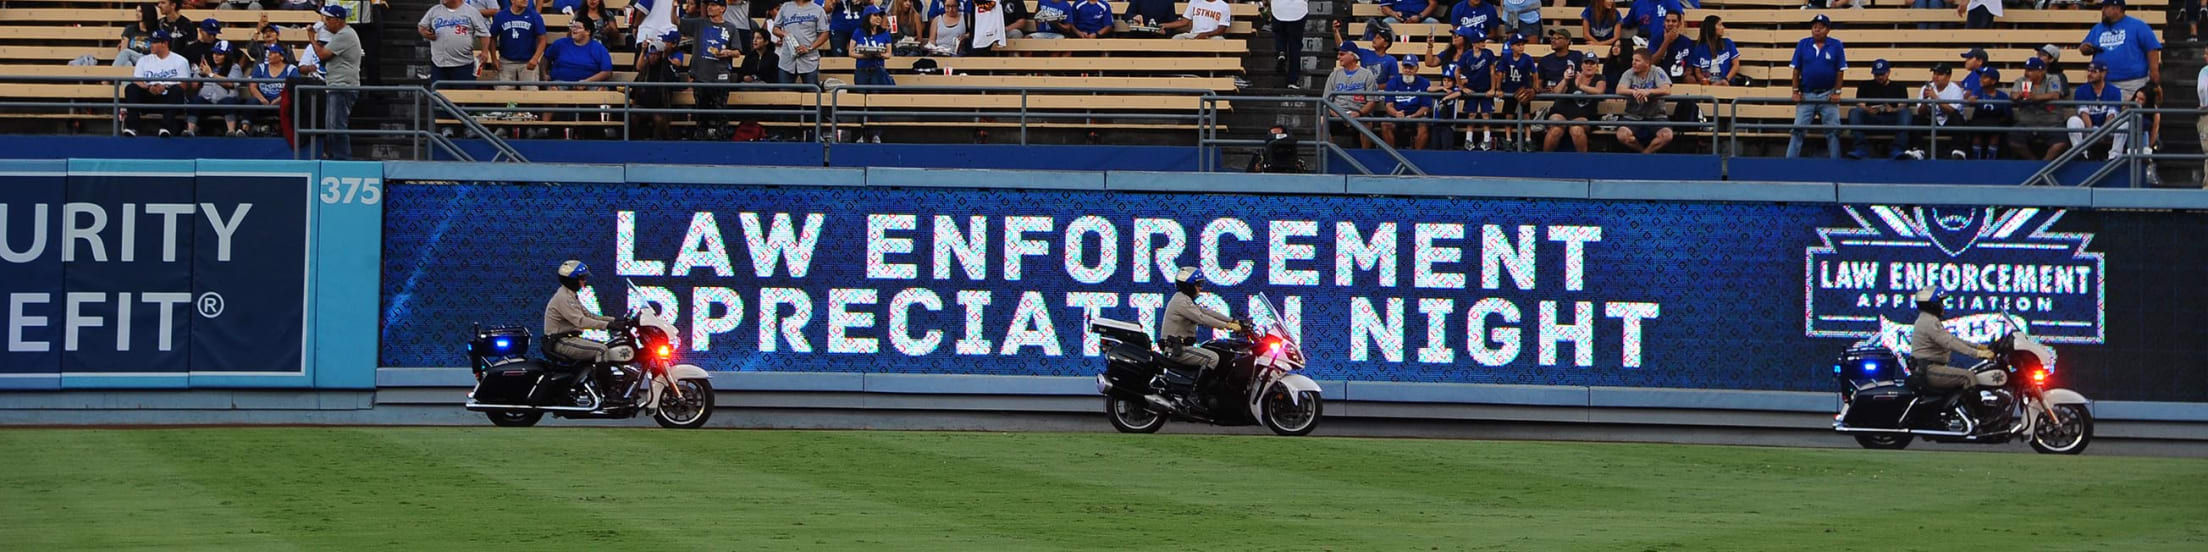 Law Enforcement Night Los Angeles Dodgers